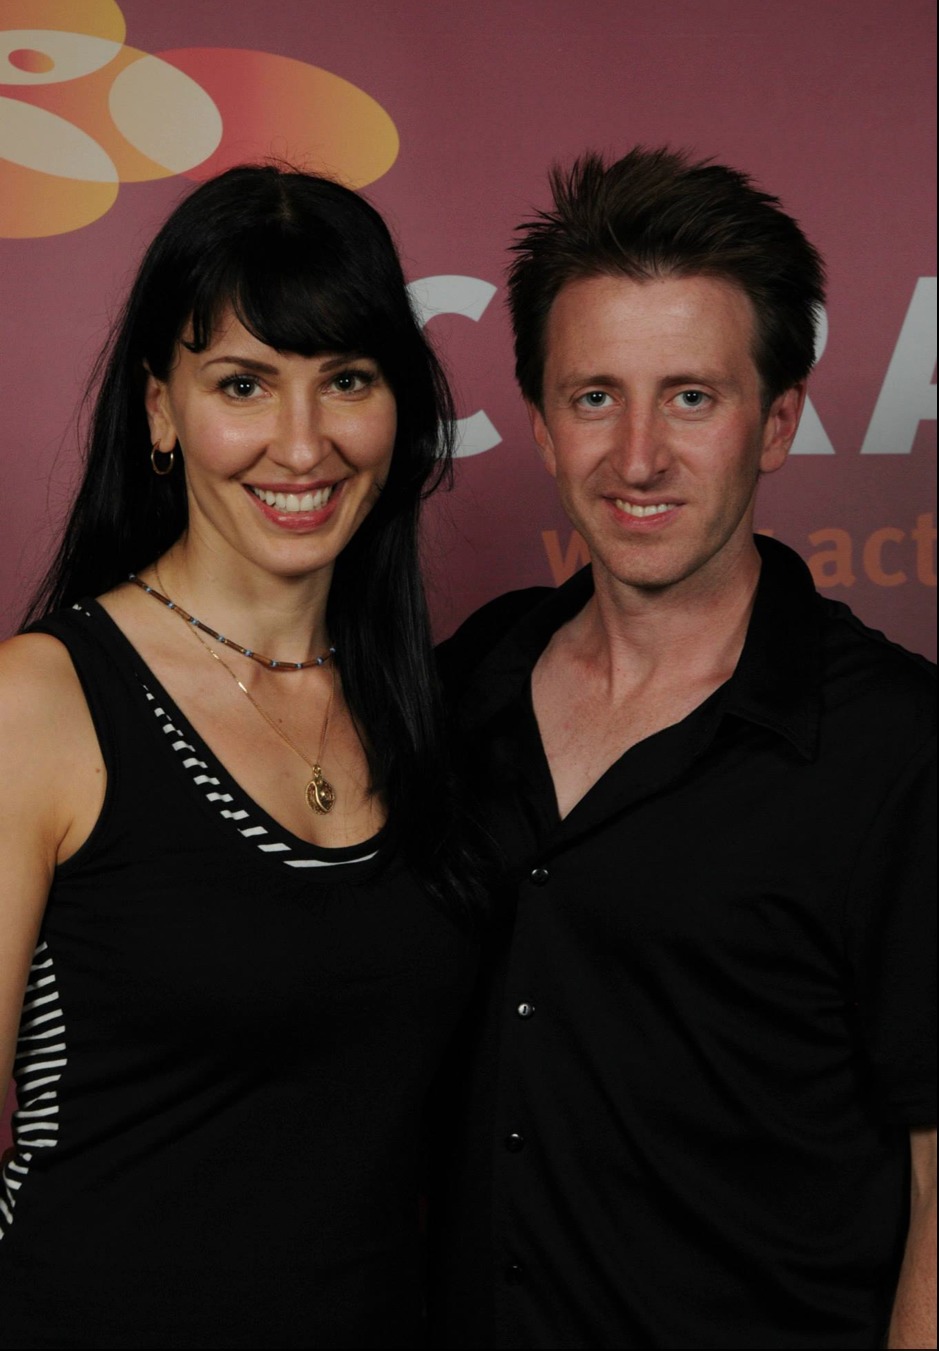 Attending Actra Awards, July 2013 with Evalina Turpin